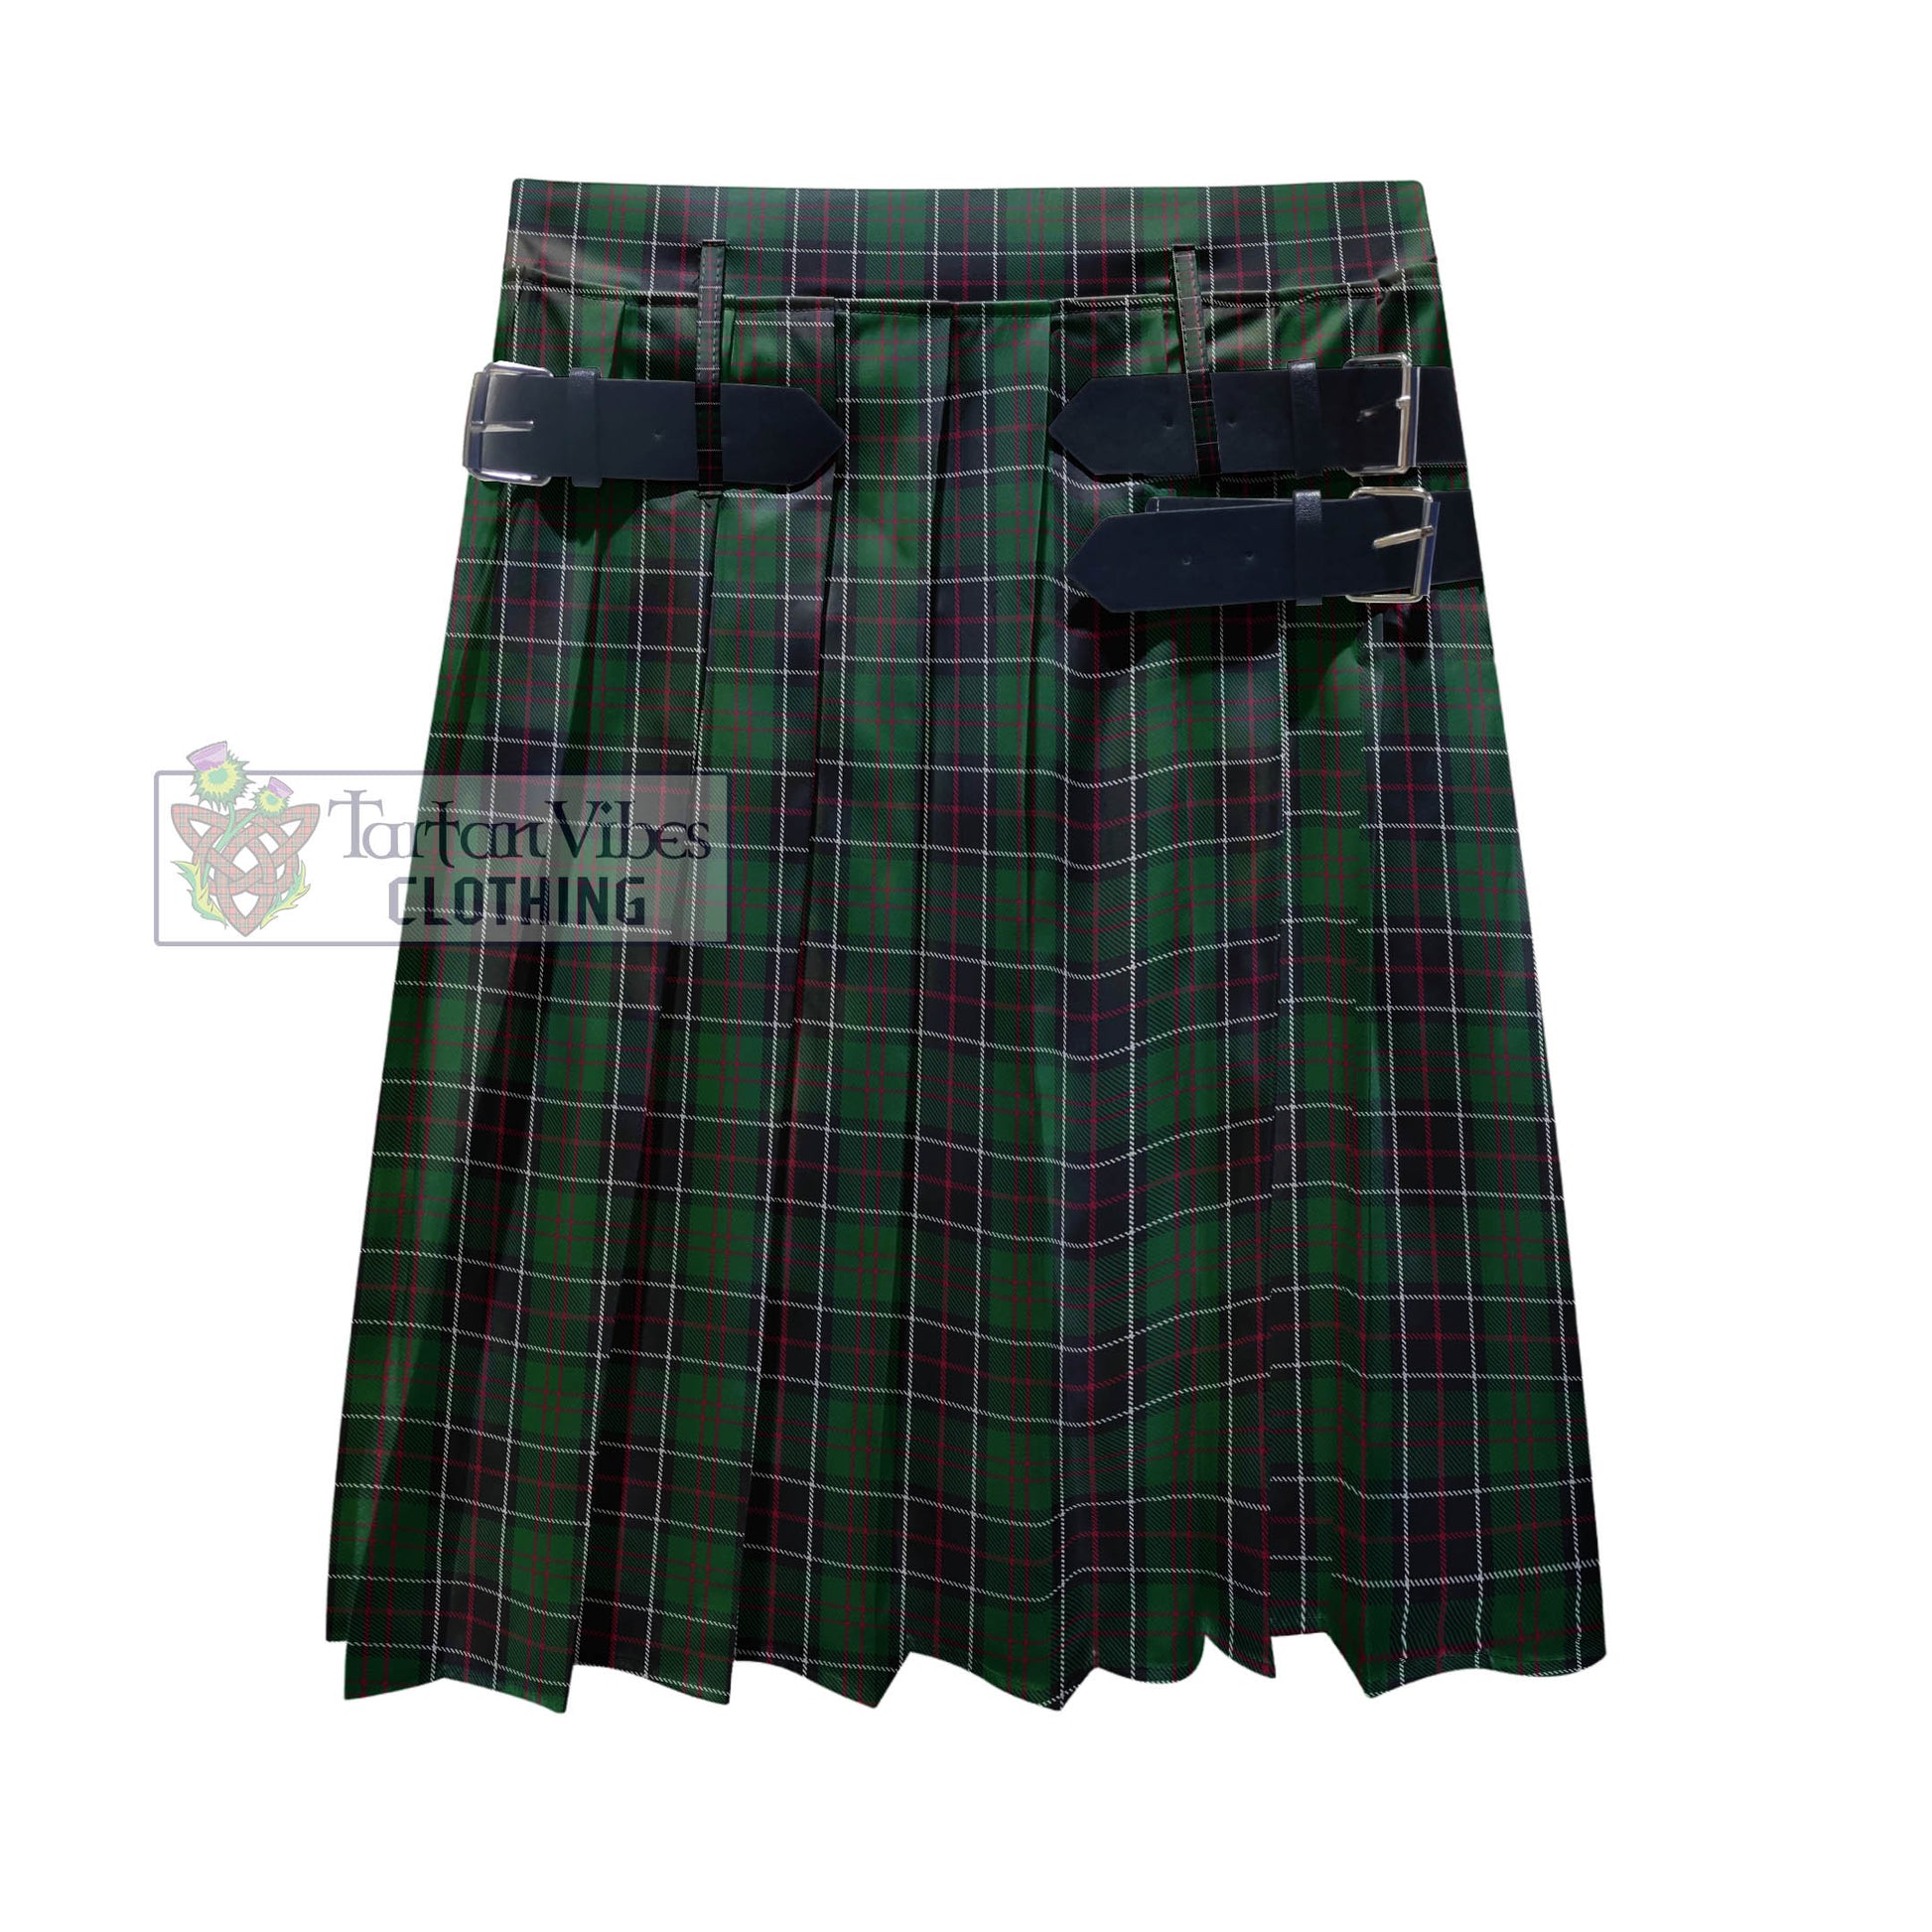 Tartan Vibes Clothing Sinclair Hunting Tartan Men's Pleated Skirt - Fashion Casual Retro Scottish Style